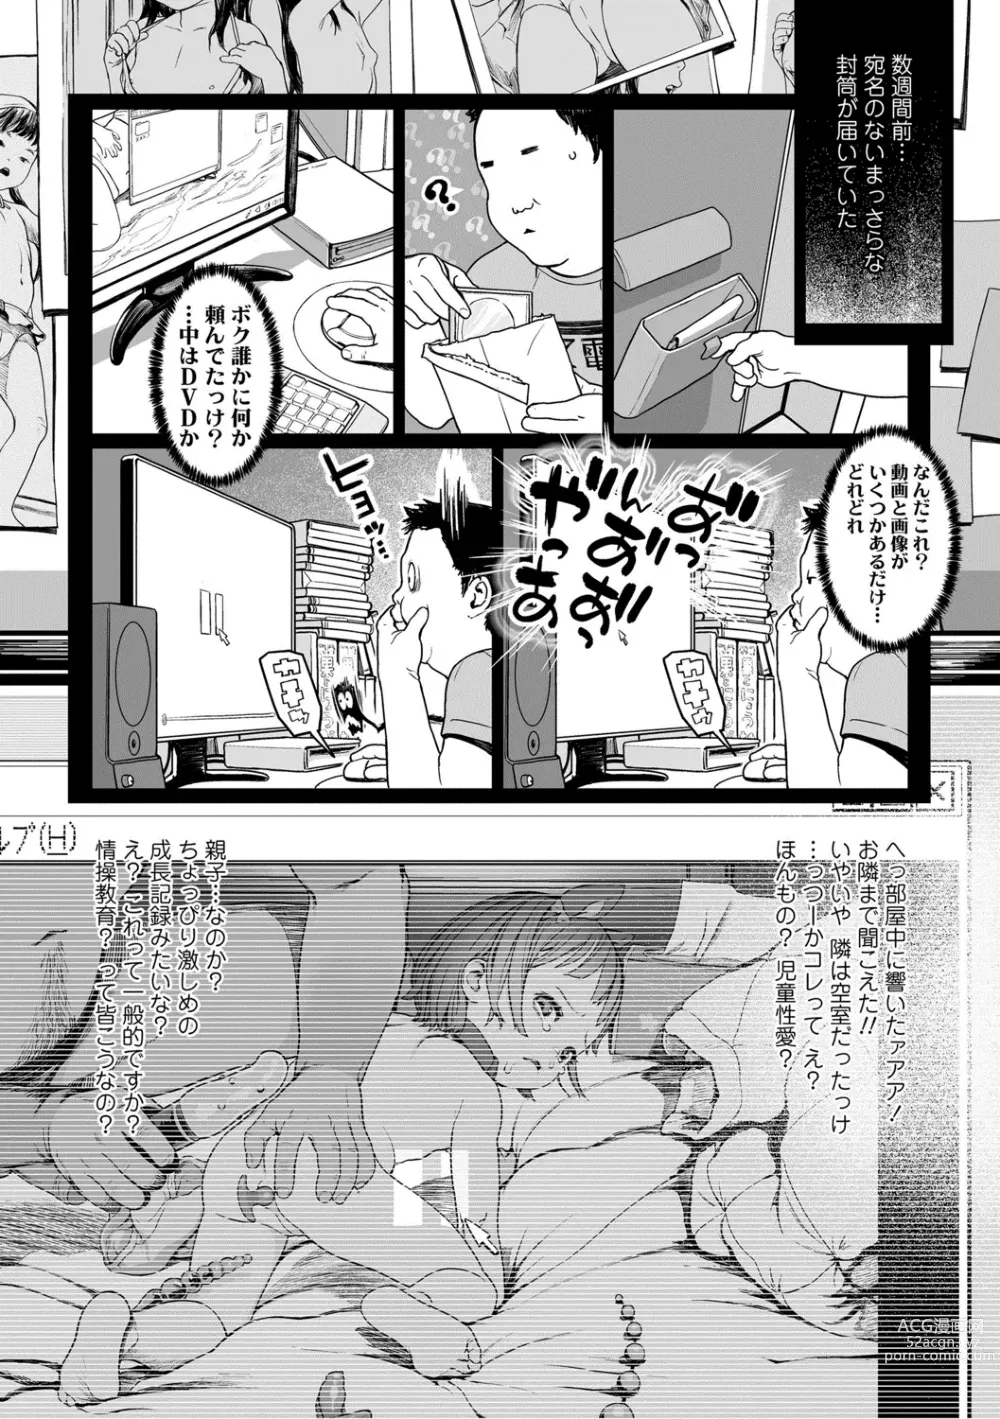 Page 8 of manga Hitoketakko Adorable